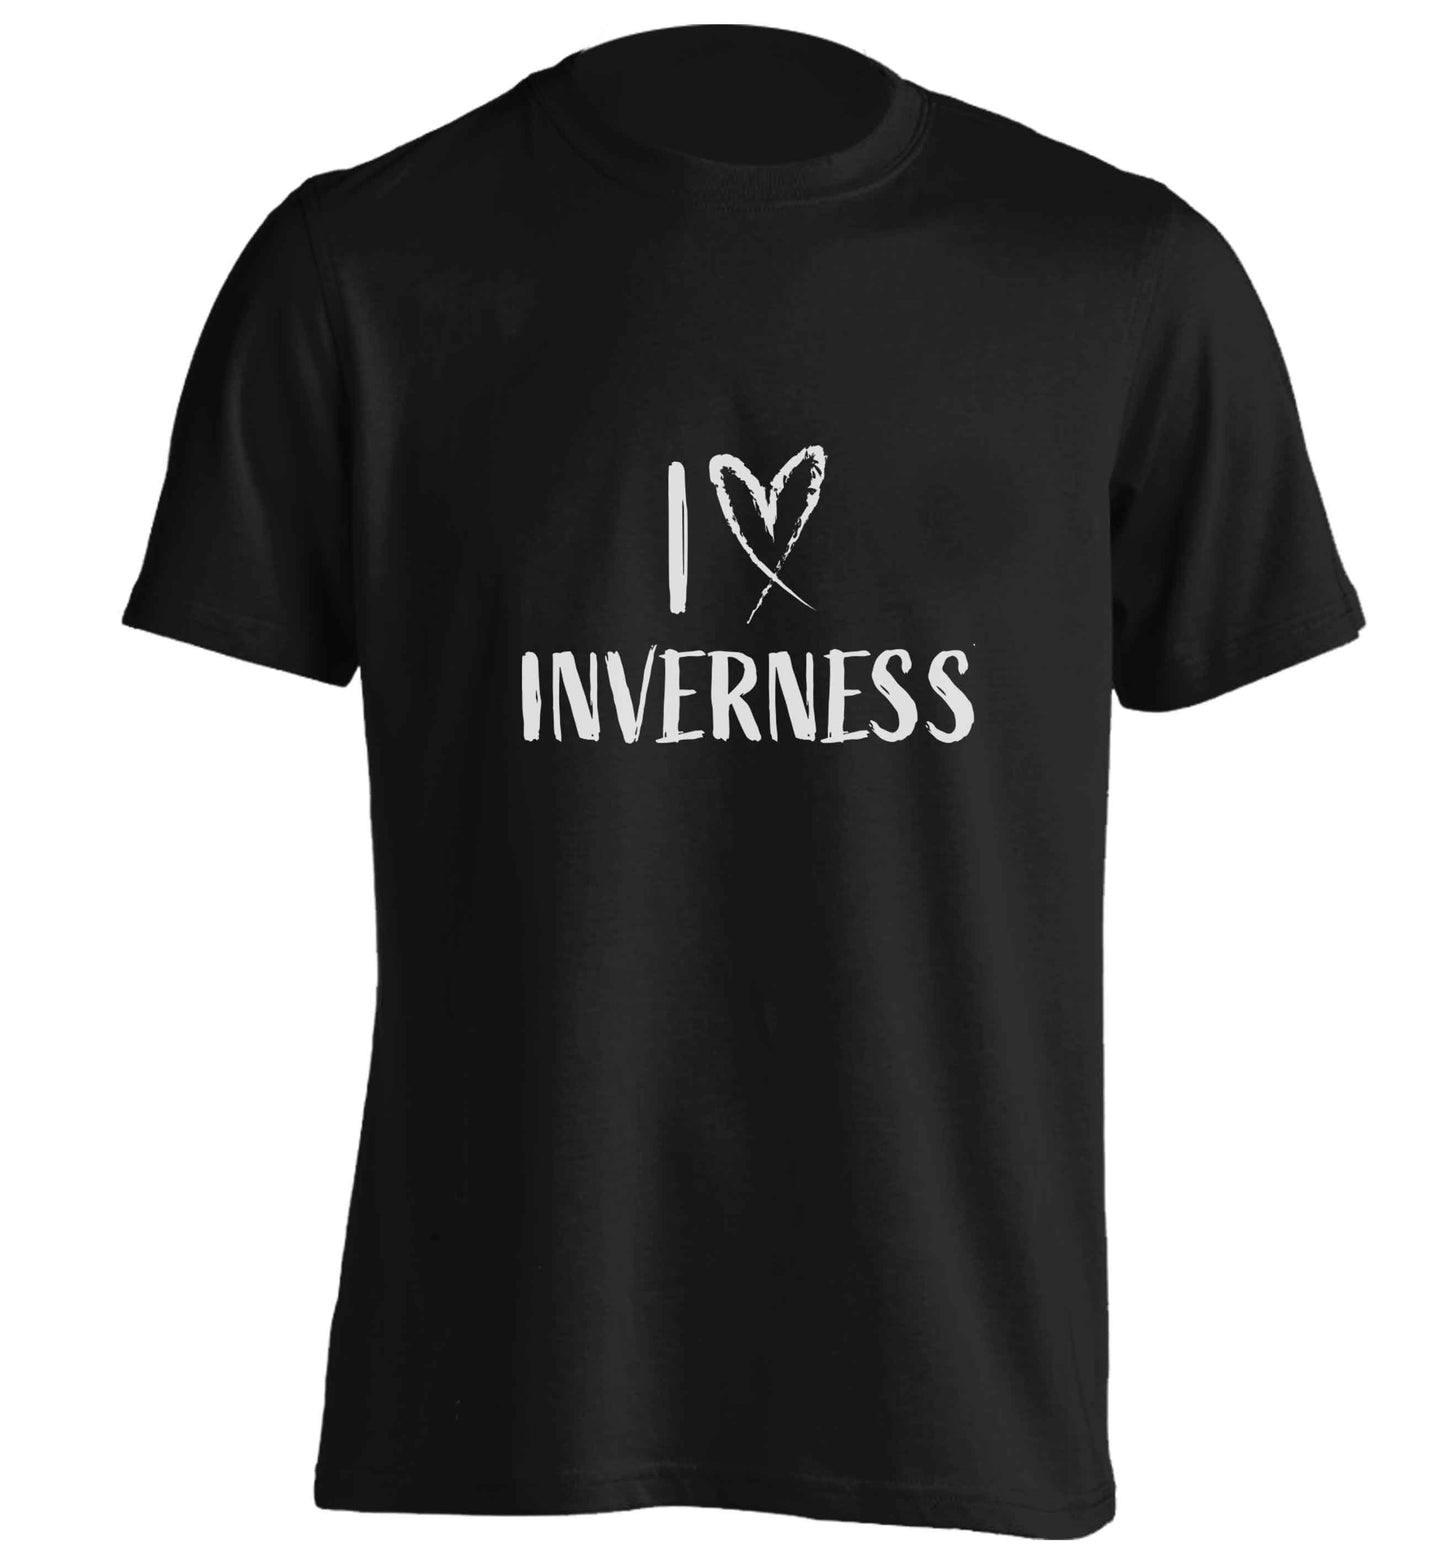 I love Inverness adults unisex black Tshirt 2XL